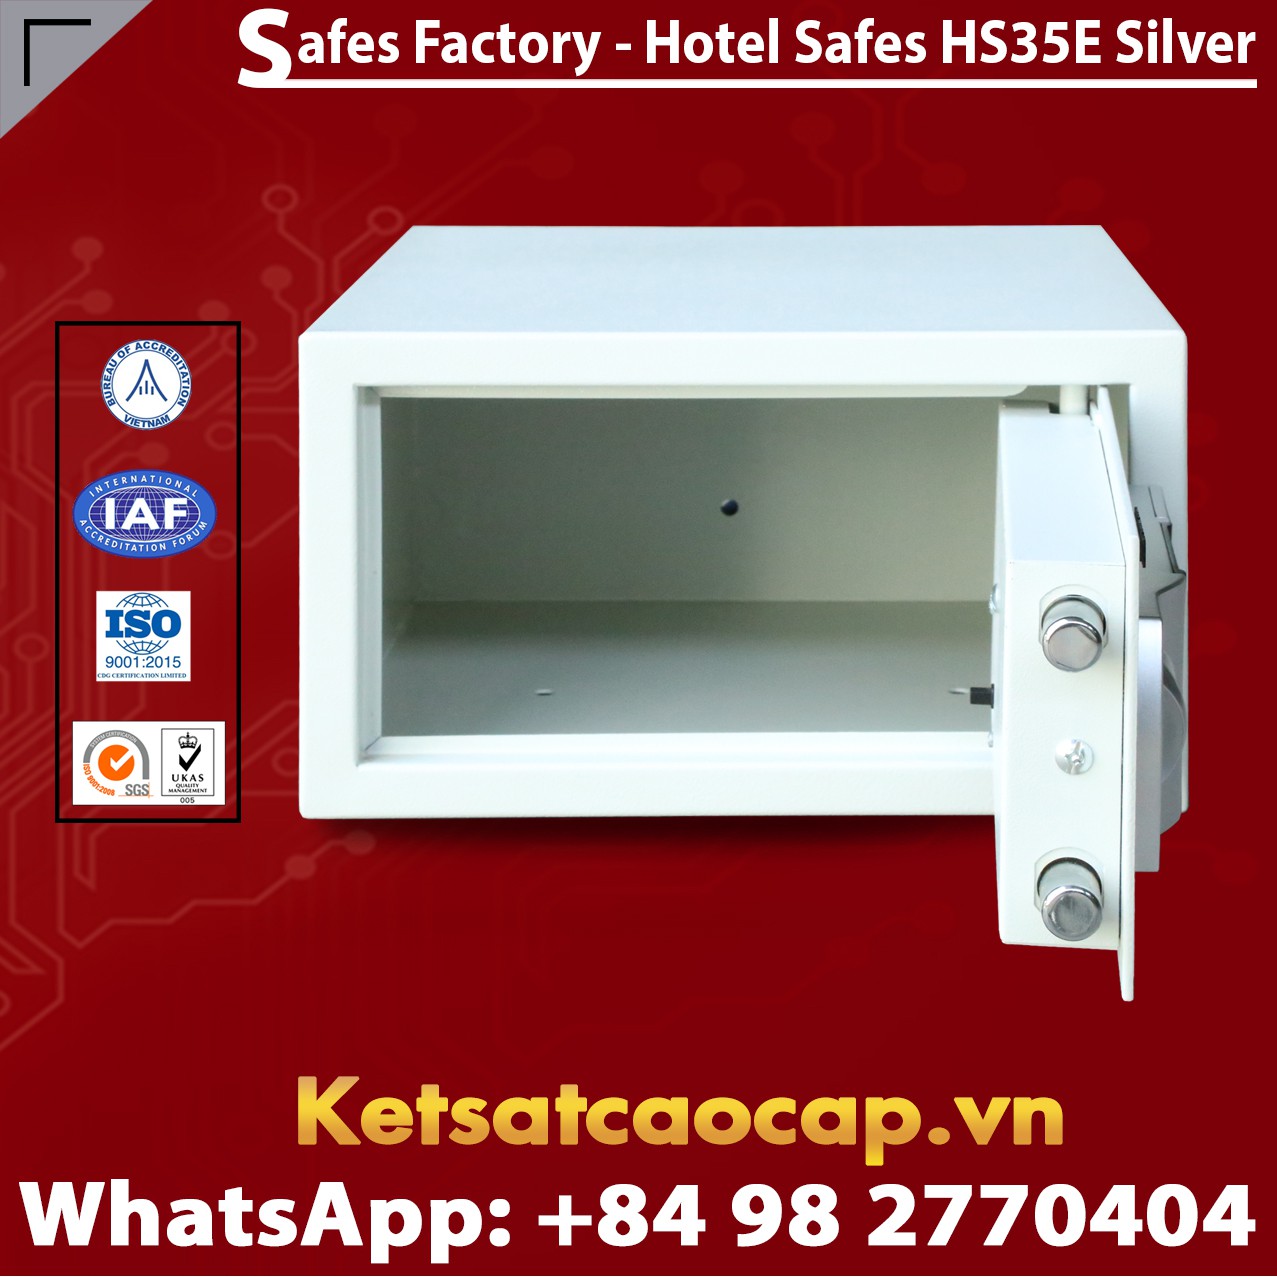 Hotel Safety Deposit Box HOMESUN HS35 E Silver